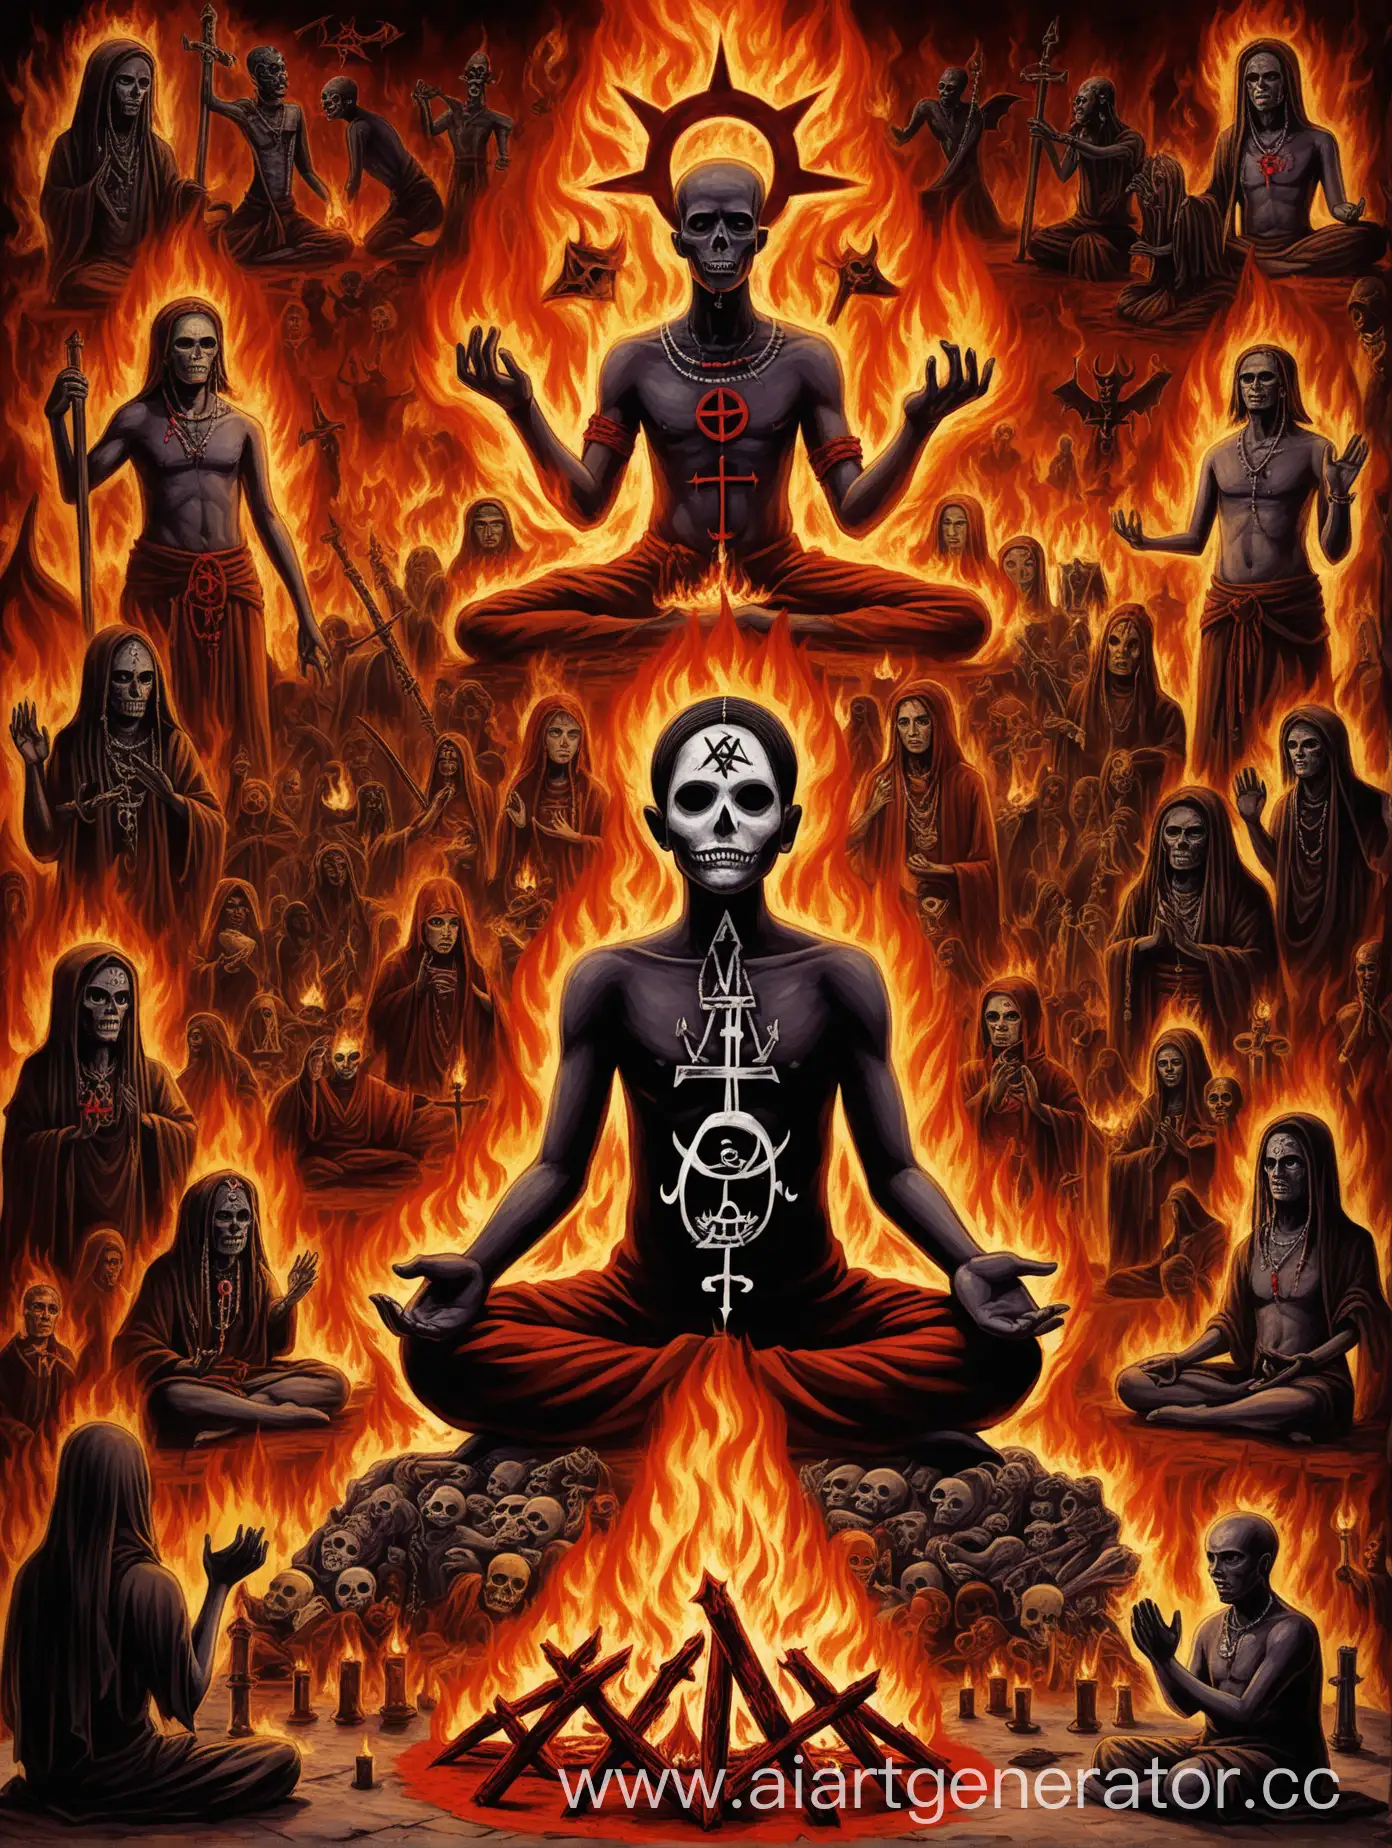 Meditative-Figure-Amidst-Flames-and-Voodoo-Symbols-in-WarTorn-Atmosphere